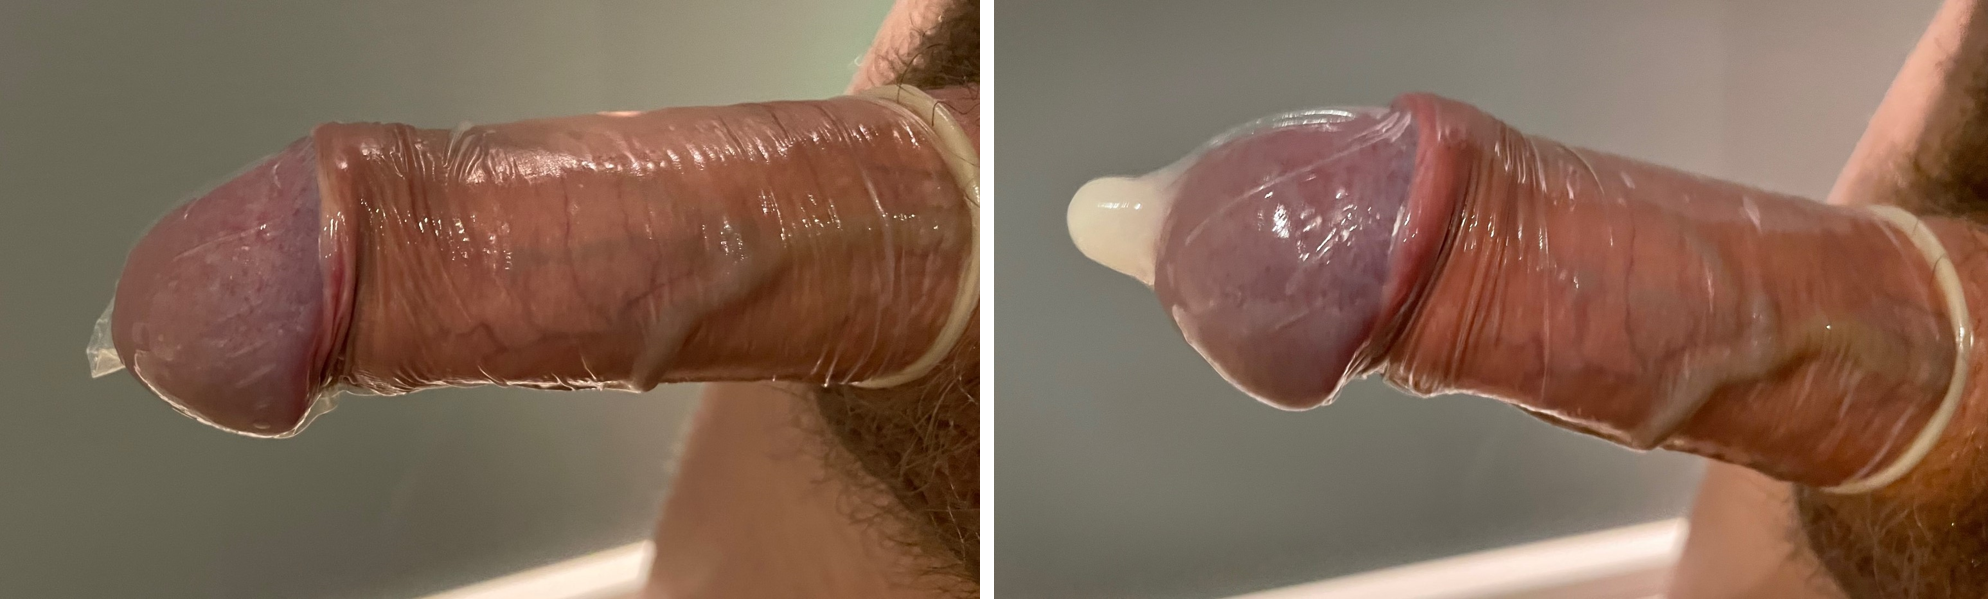 ann spicer share cumming into a condom photos